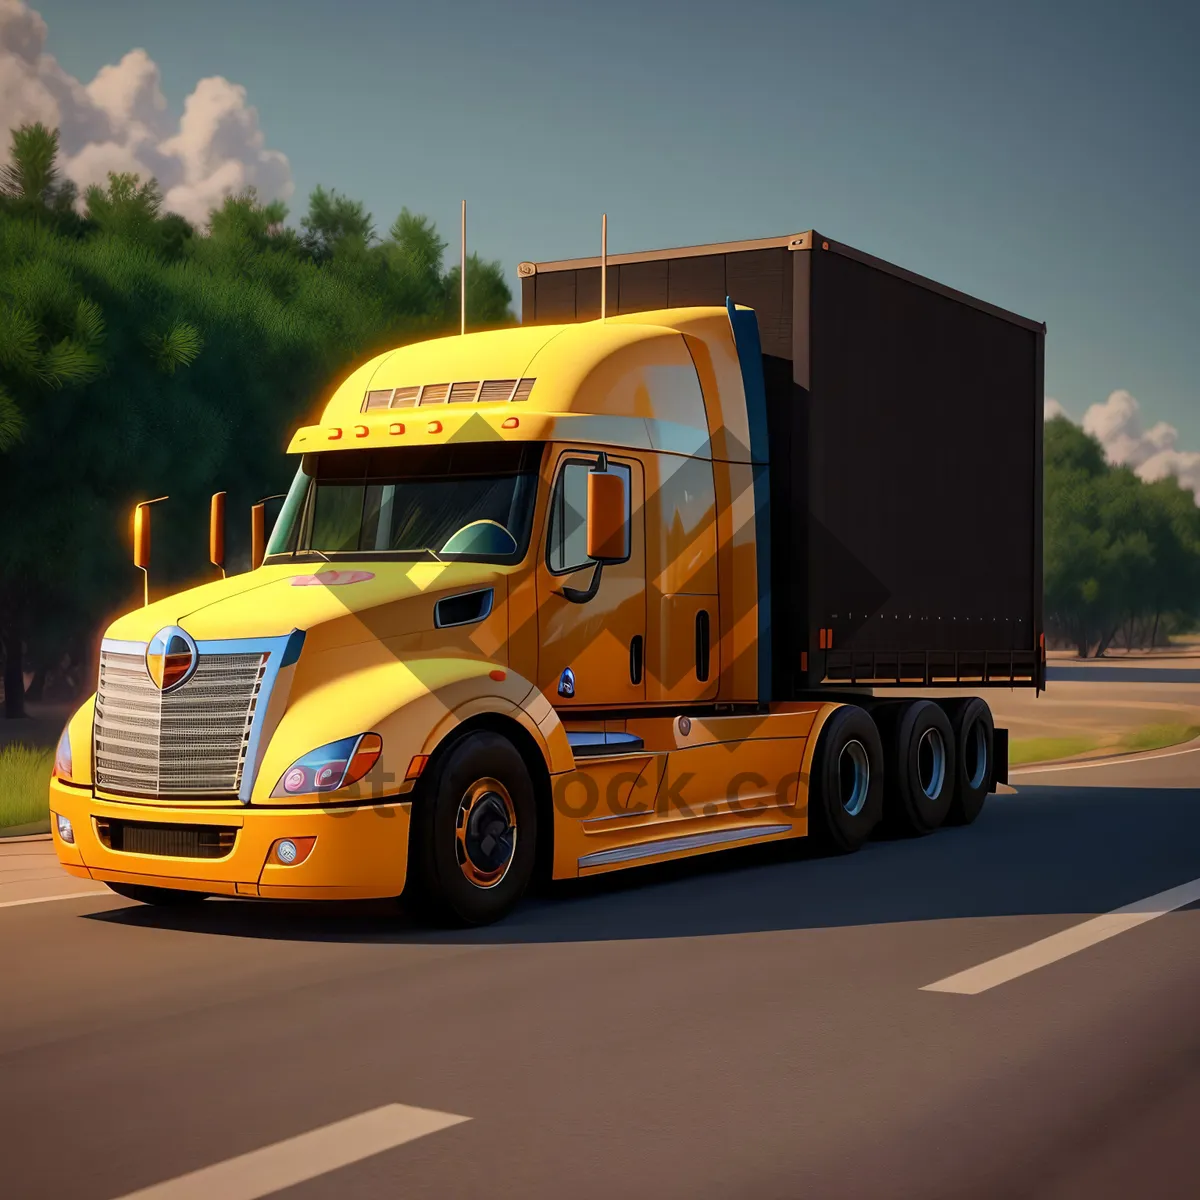 Picture of Highway Hauler: Efficient Cargo Transportation on Wheels